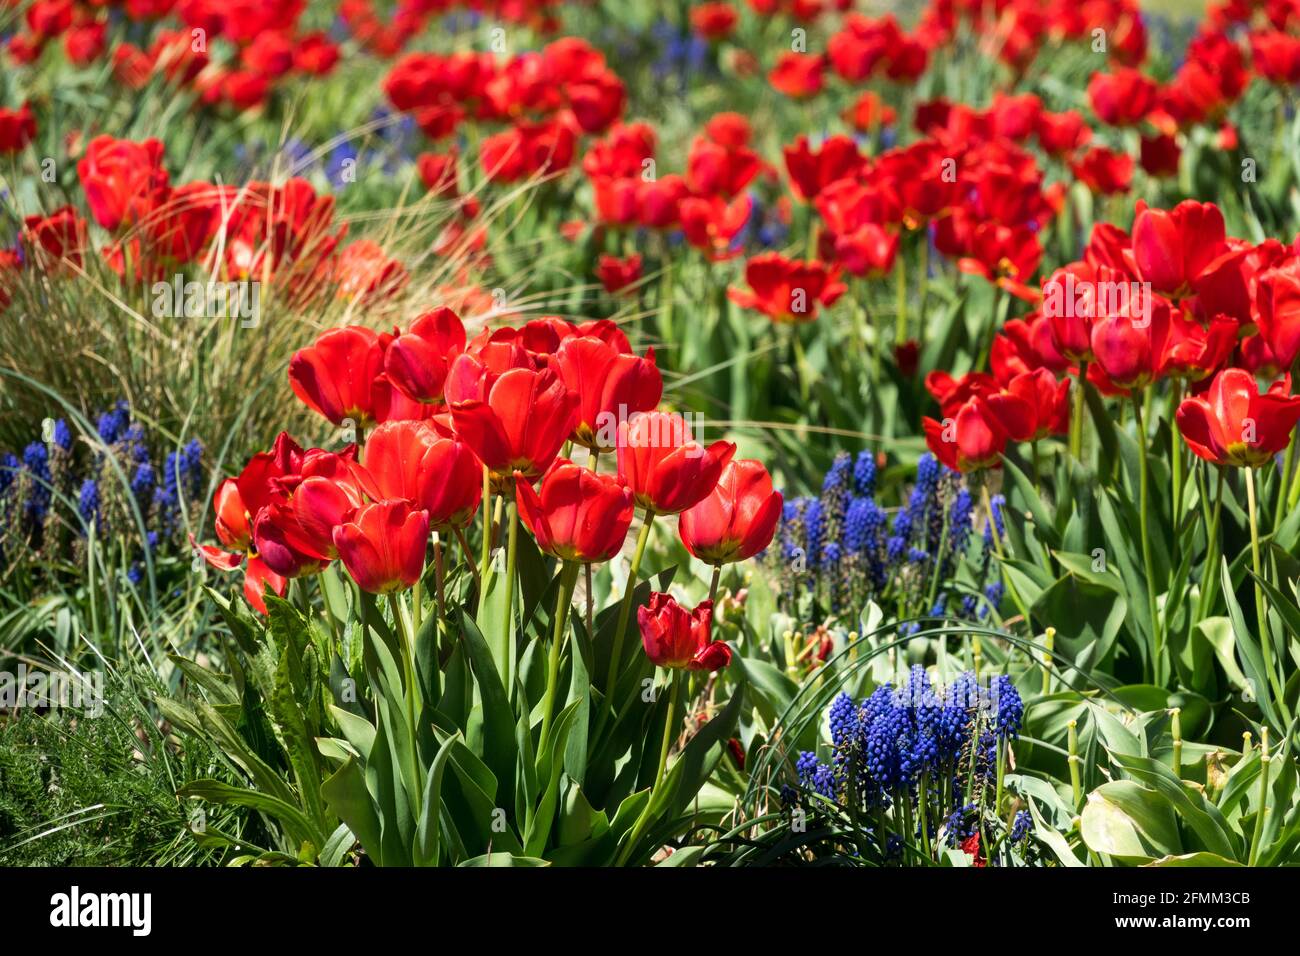 Rote blaue Frühlingsblume Tulpen Traubenhyazinthe Rote Tulpen Tulpen Trauben Hyazinth Frühlingsblume Rotes blaues Frühlingsblumenbett schöne blühende Gartenblume Stockfoto